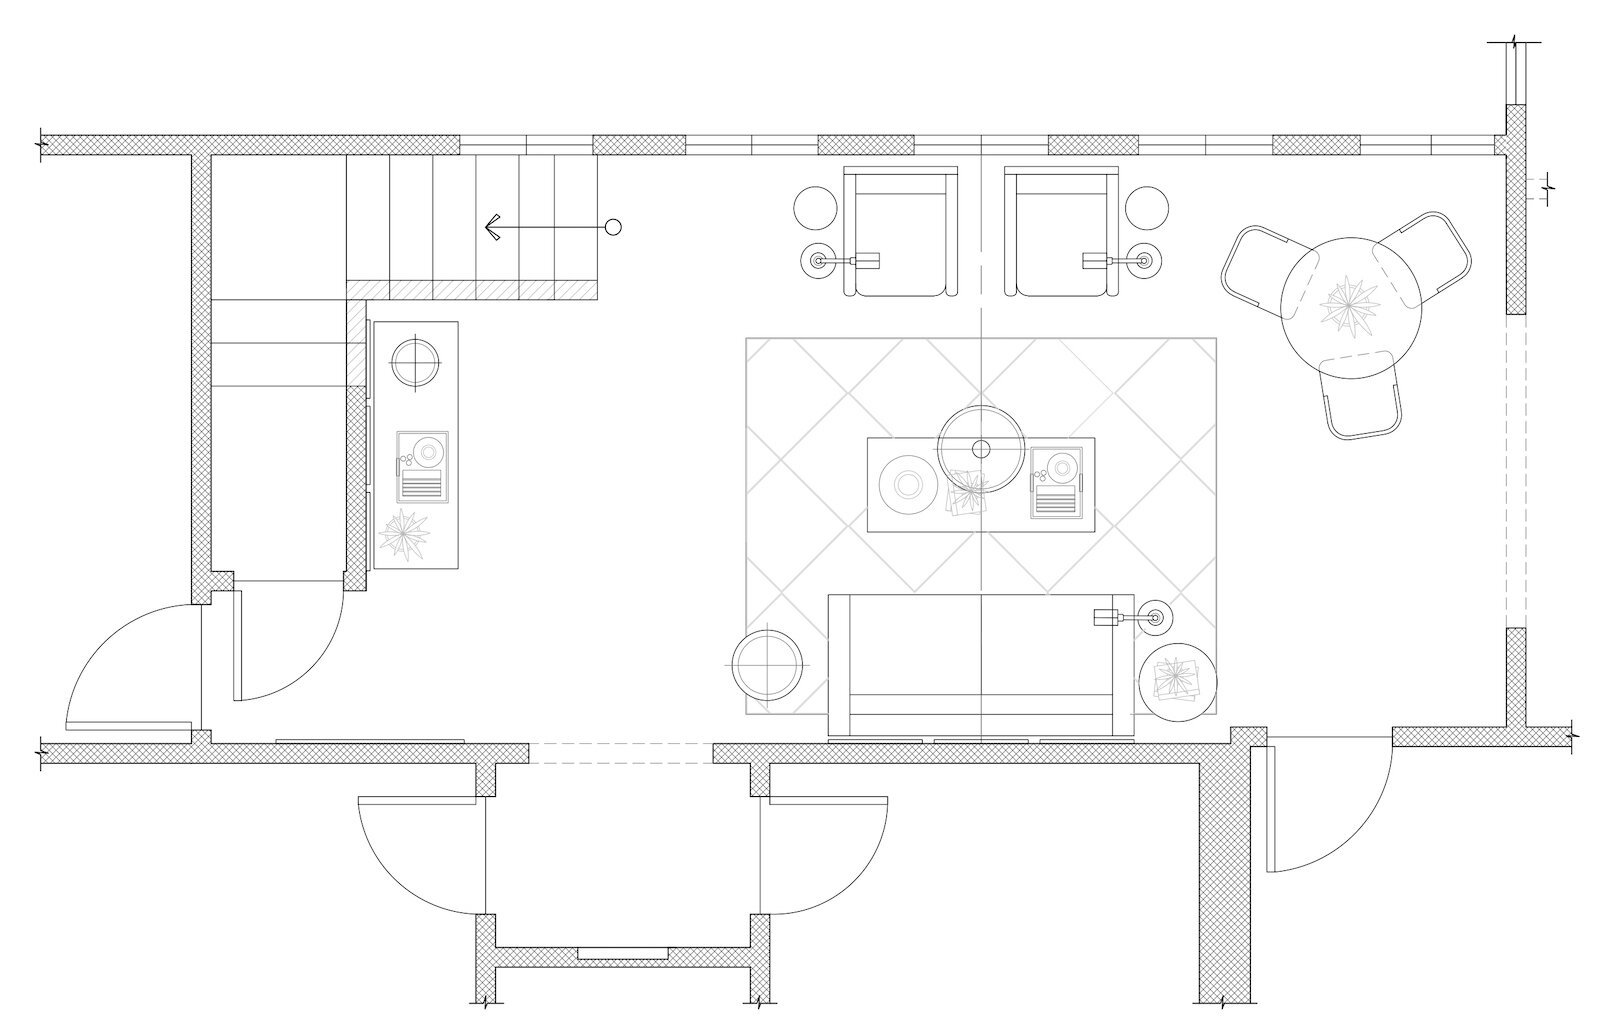 pass-through living room layout ideas